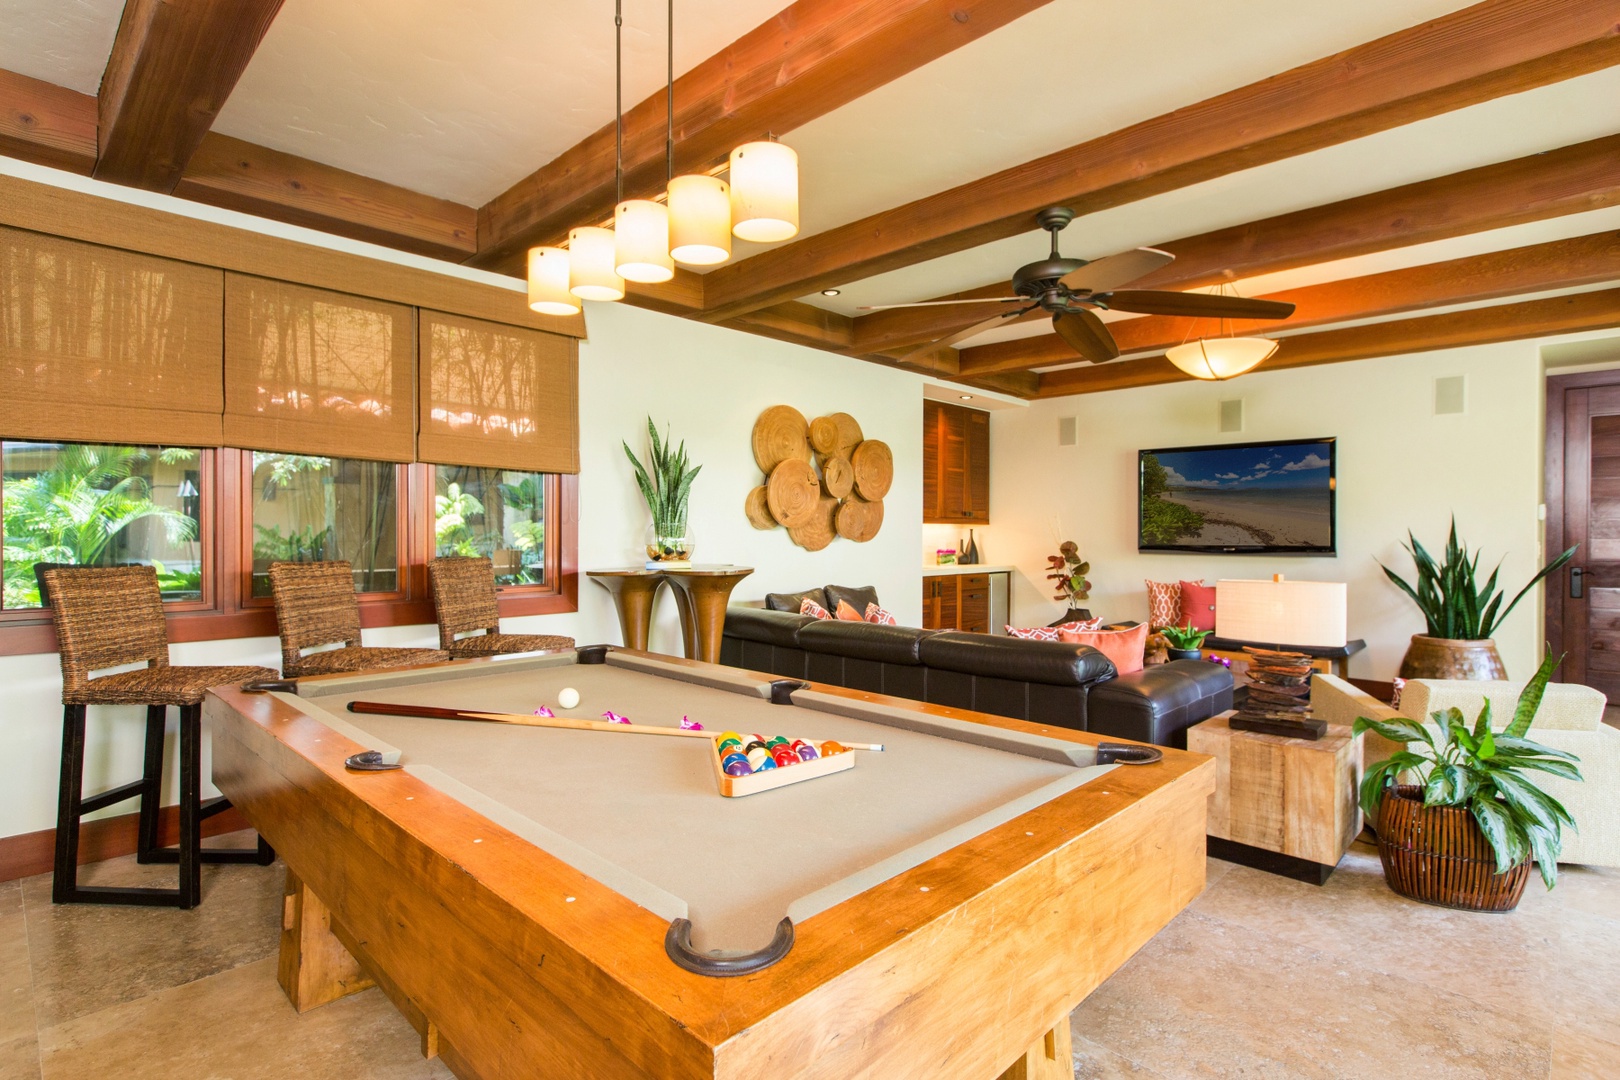 Honolulu Vacation Rentals, Royal Kahala Estate 4 Bedroom - Game Room with Pool Table